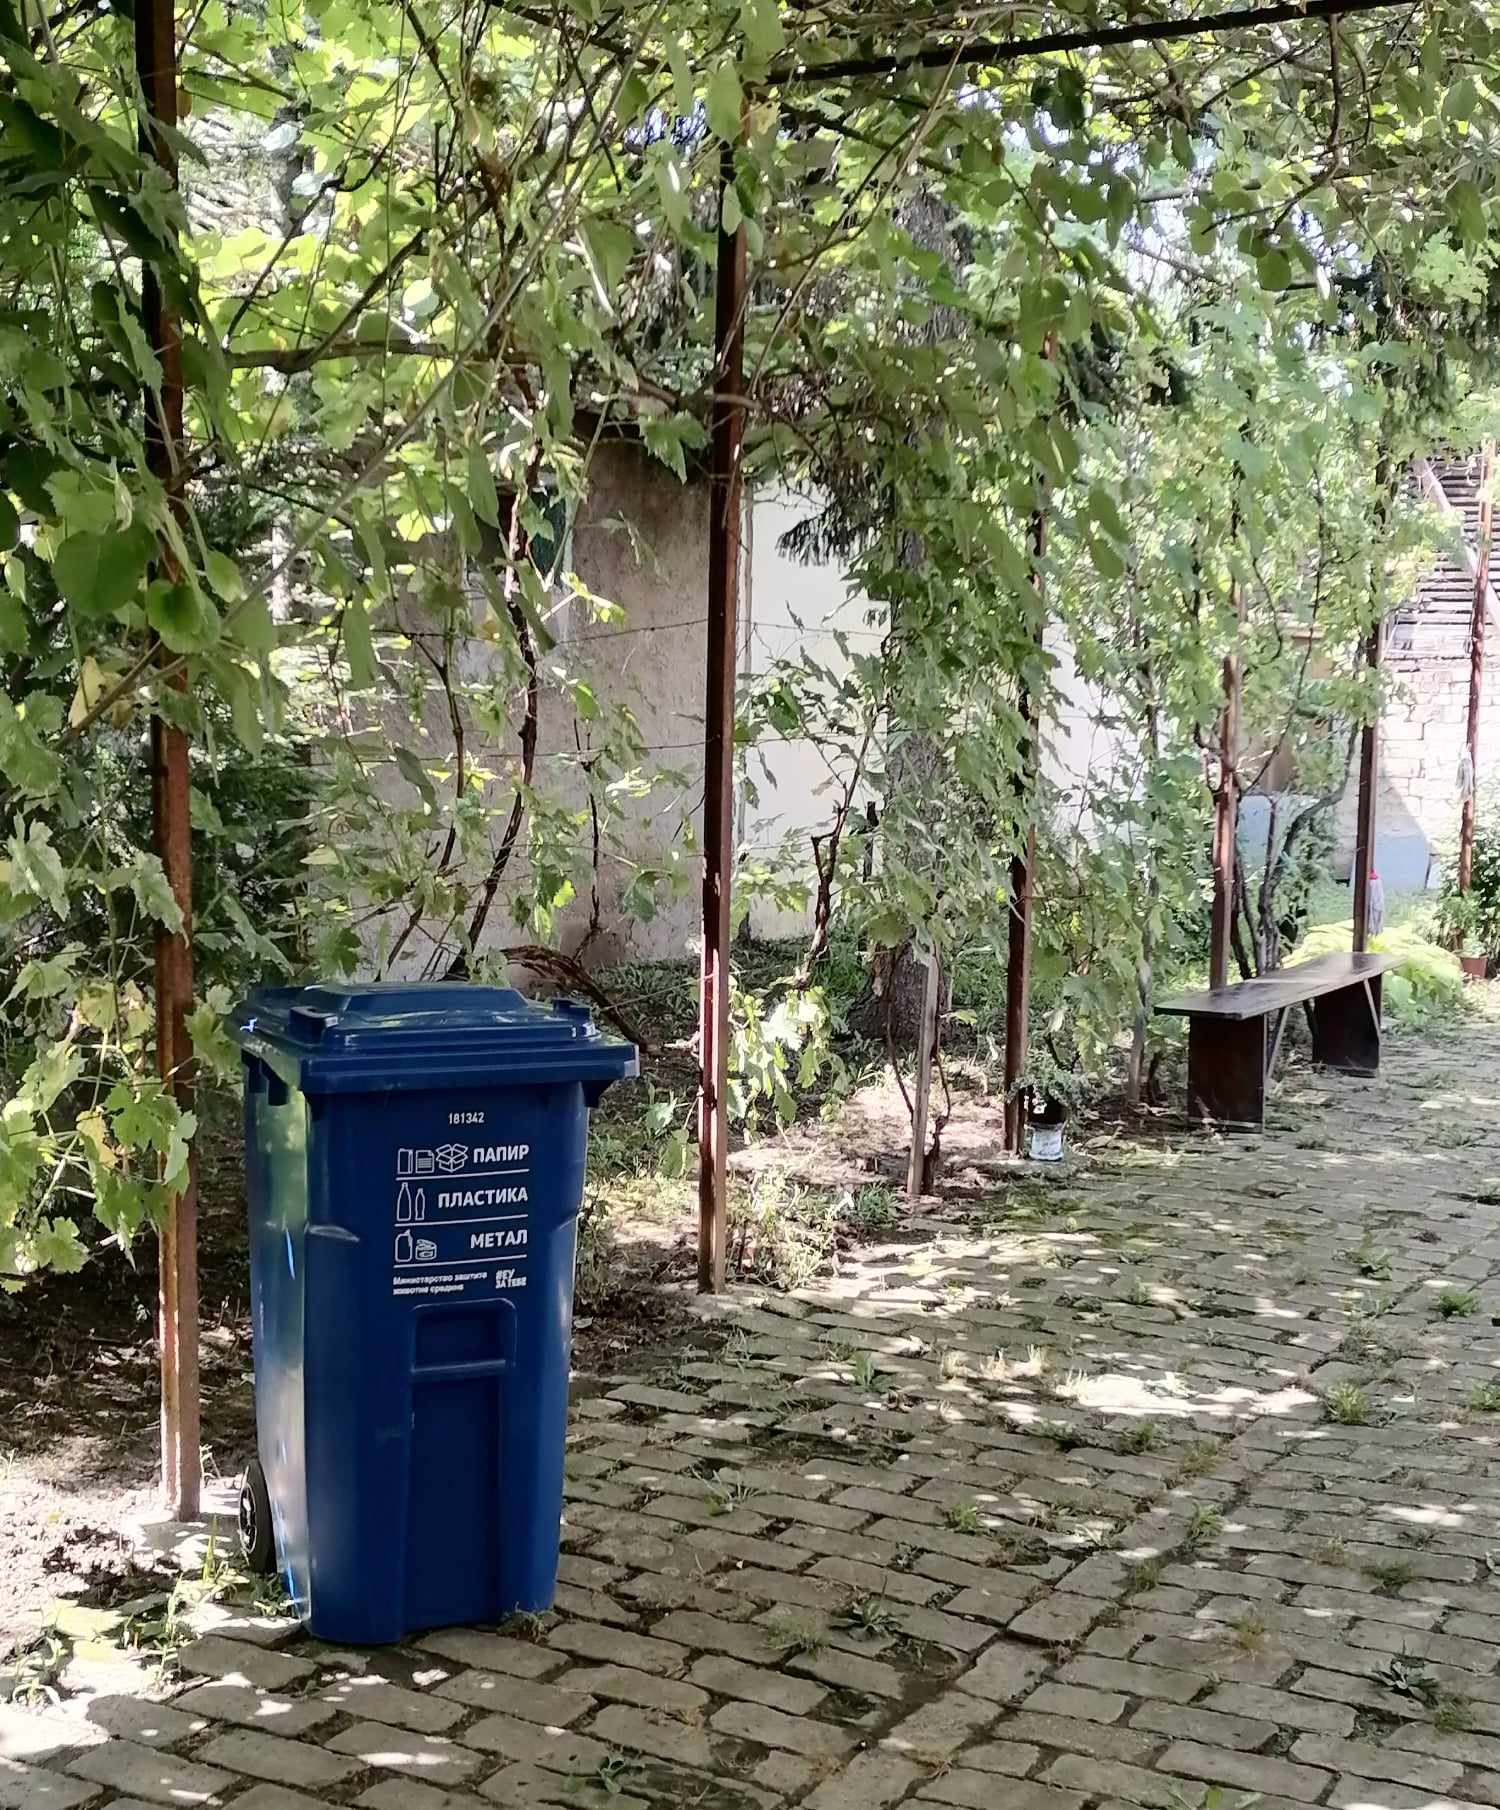 plava kanta za reciklazu